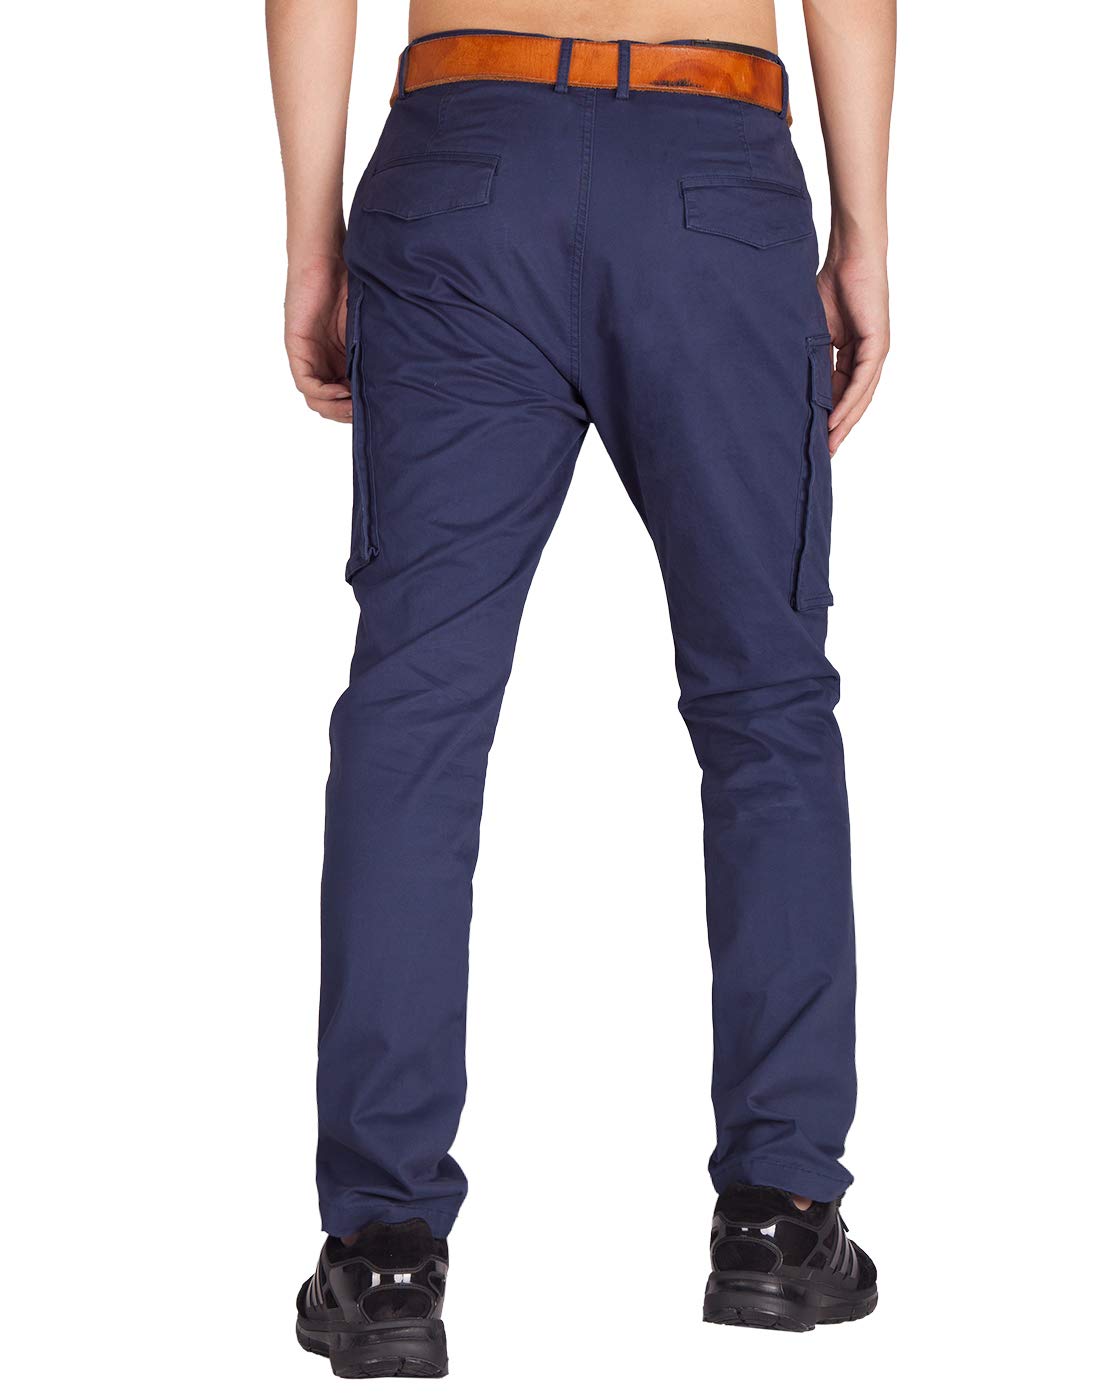 Brand New Blue Cargo Work Pants | eBay